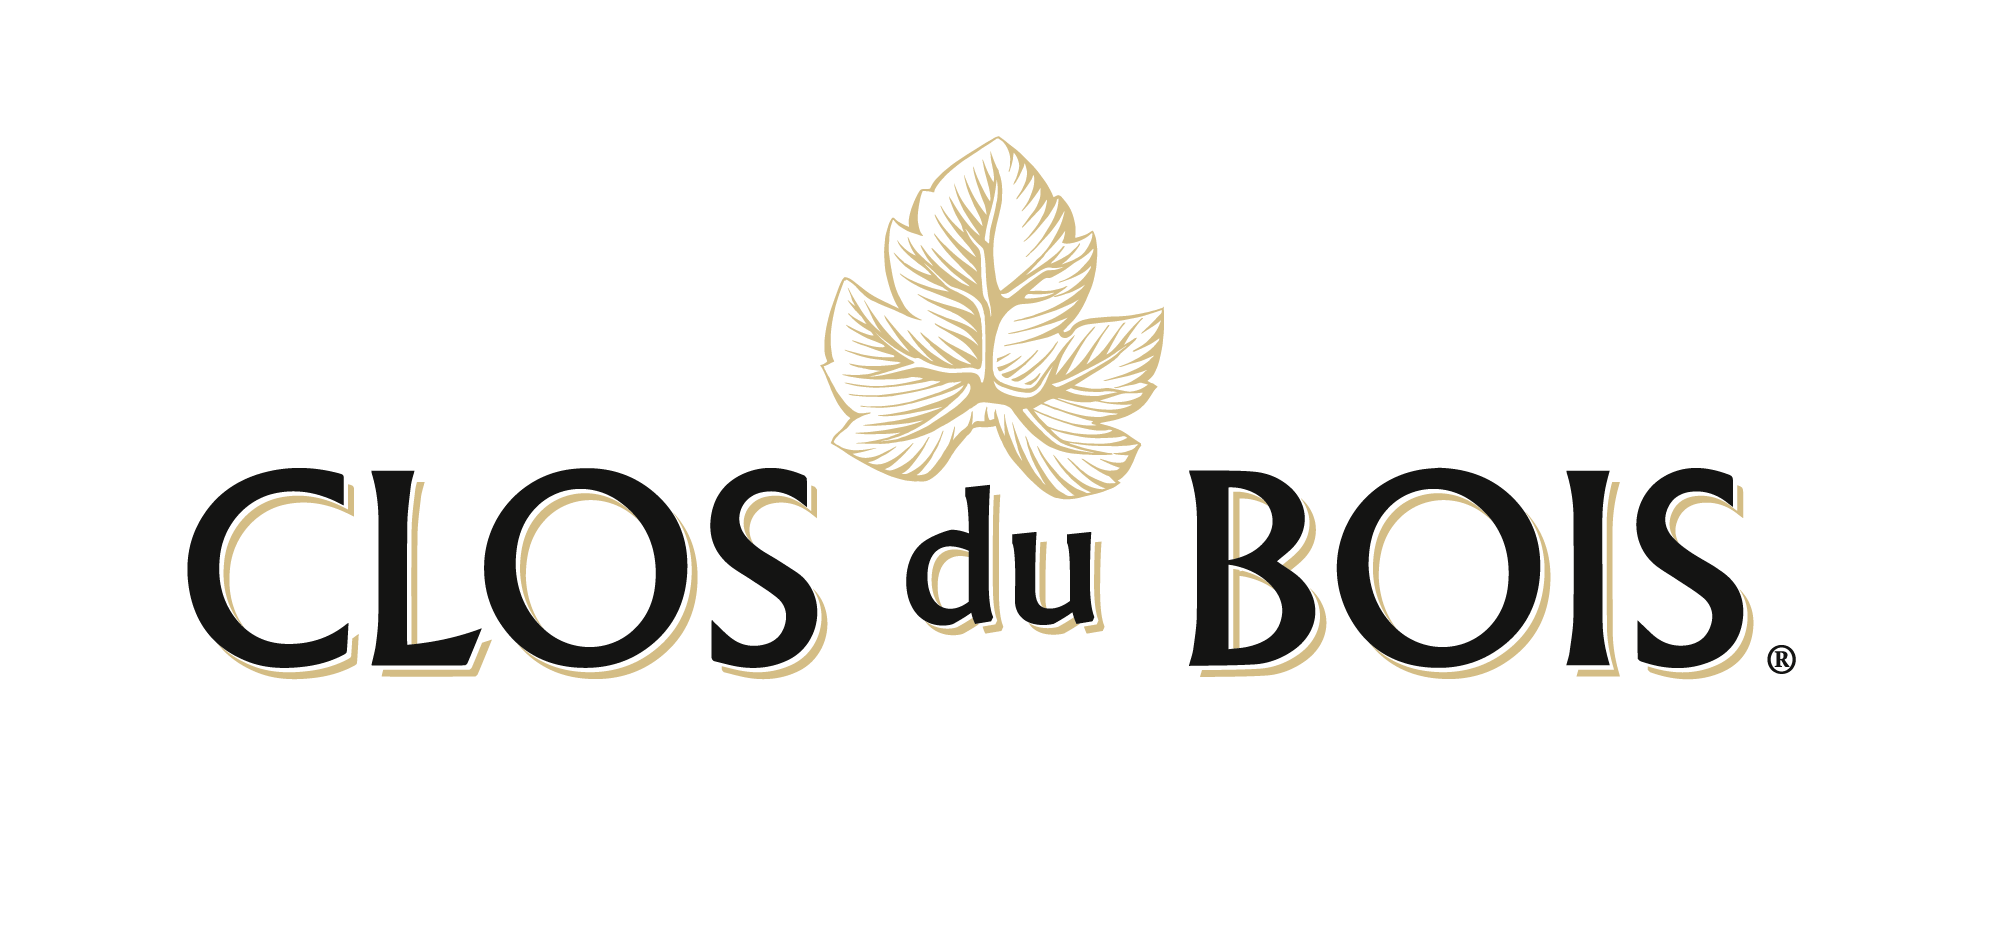 Clos du Bois logo